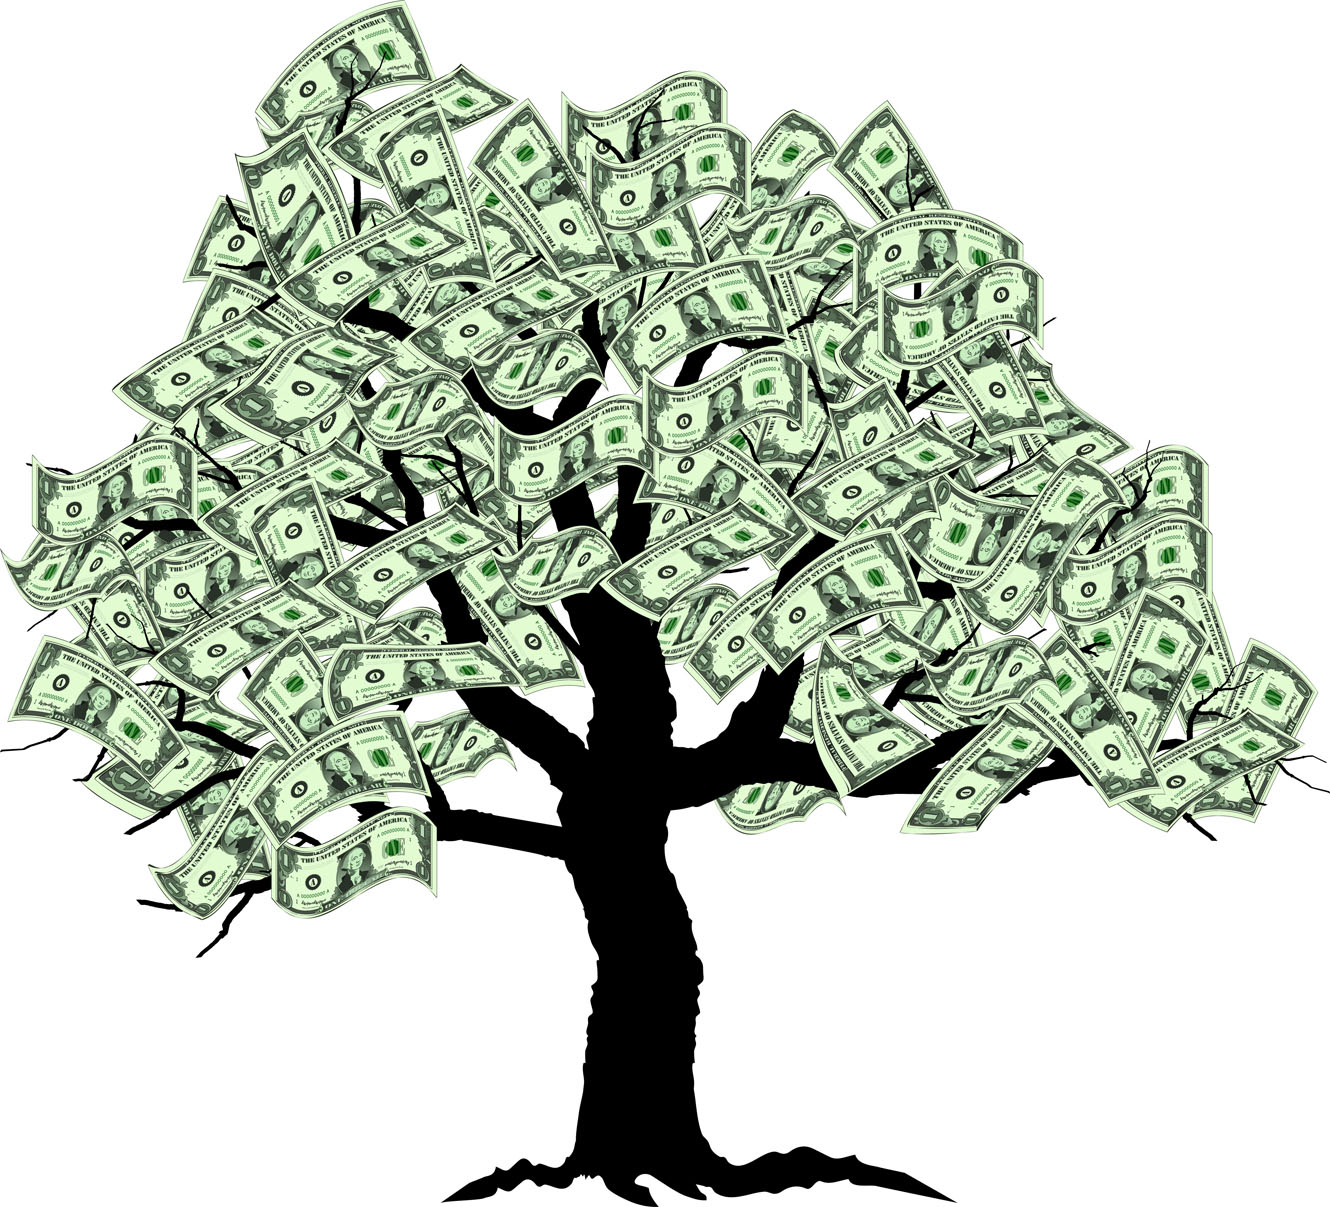 ... Money Tree - An image of 